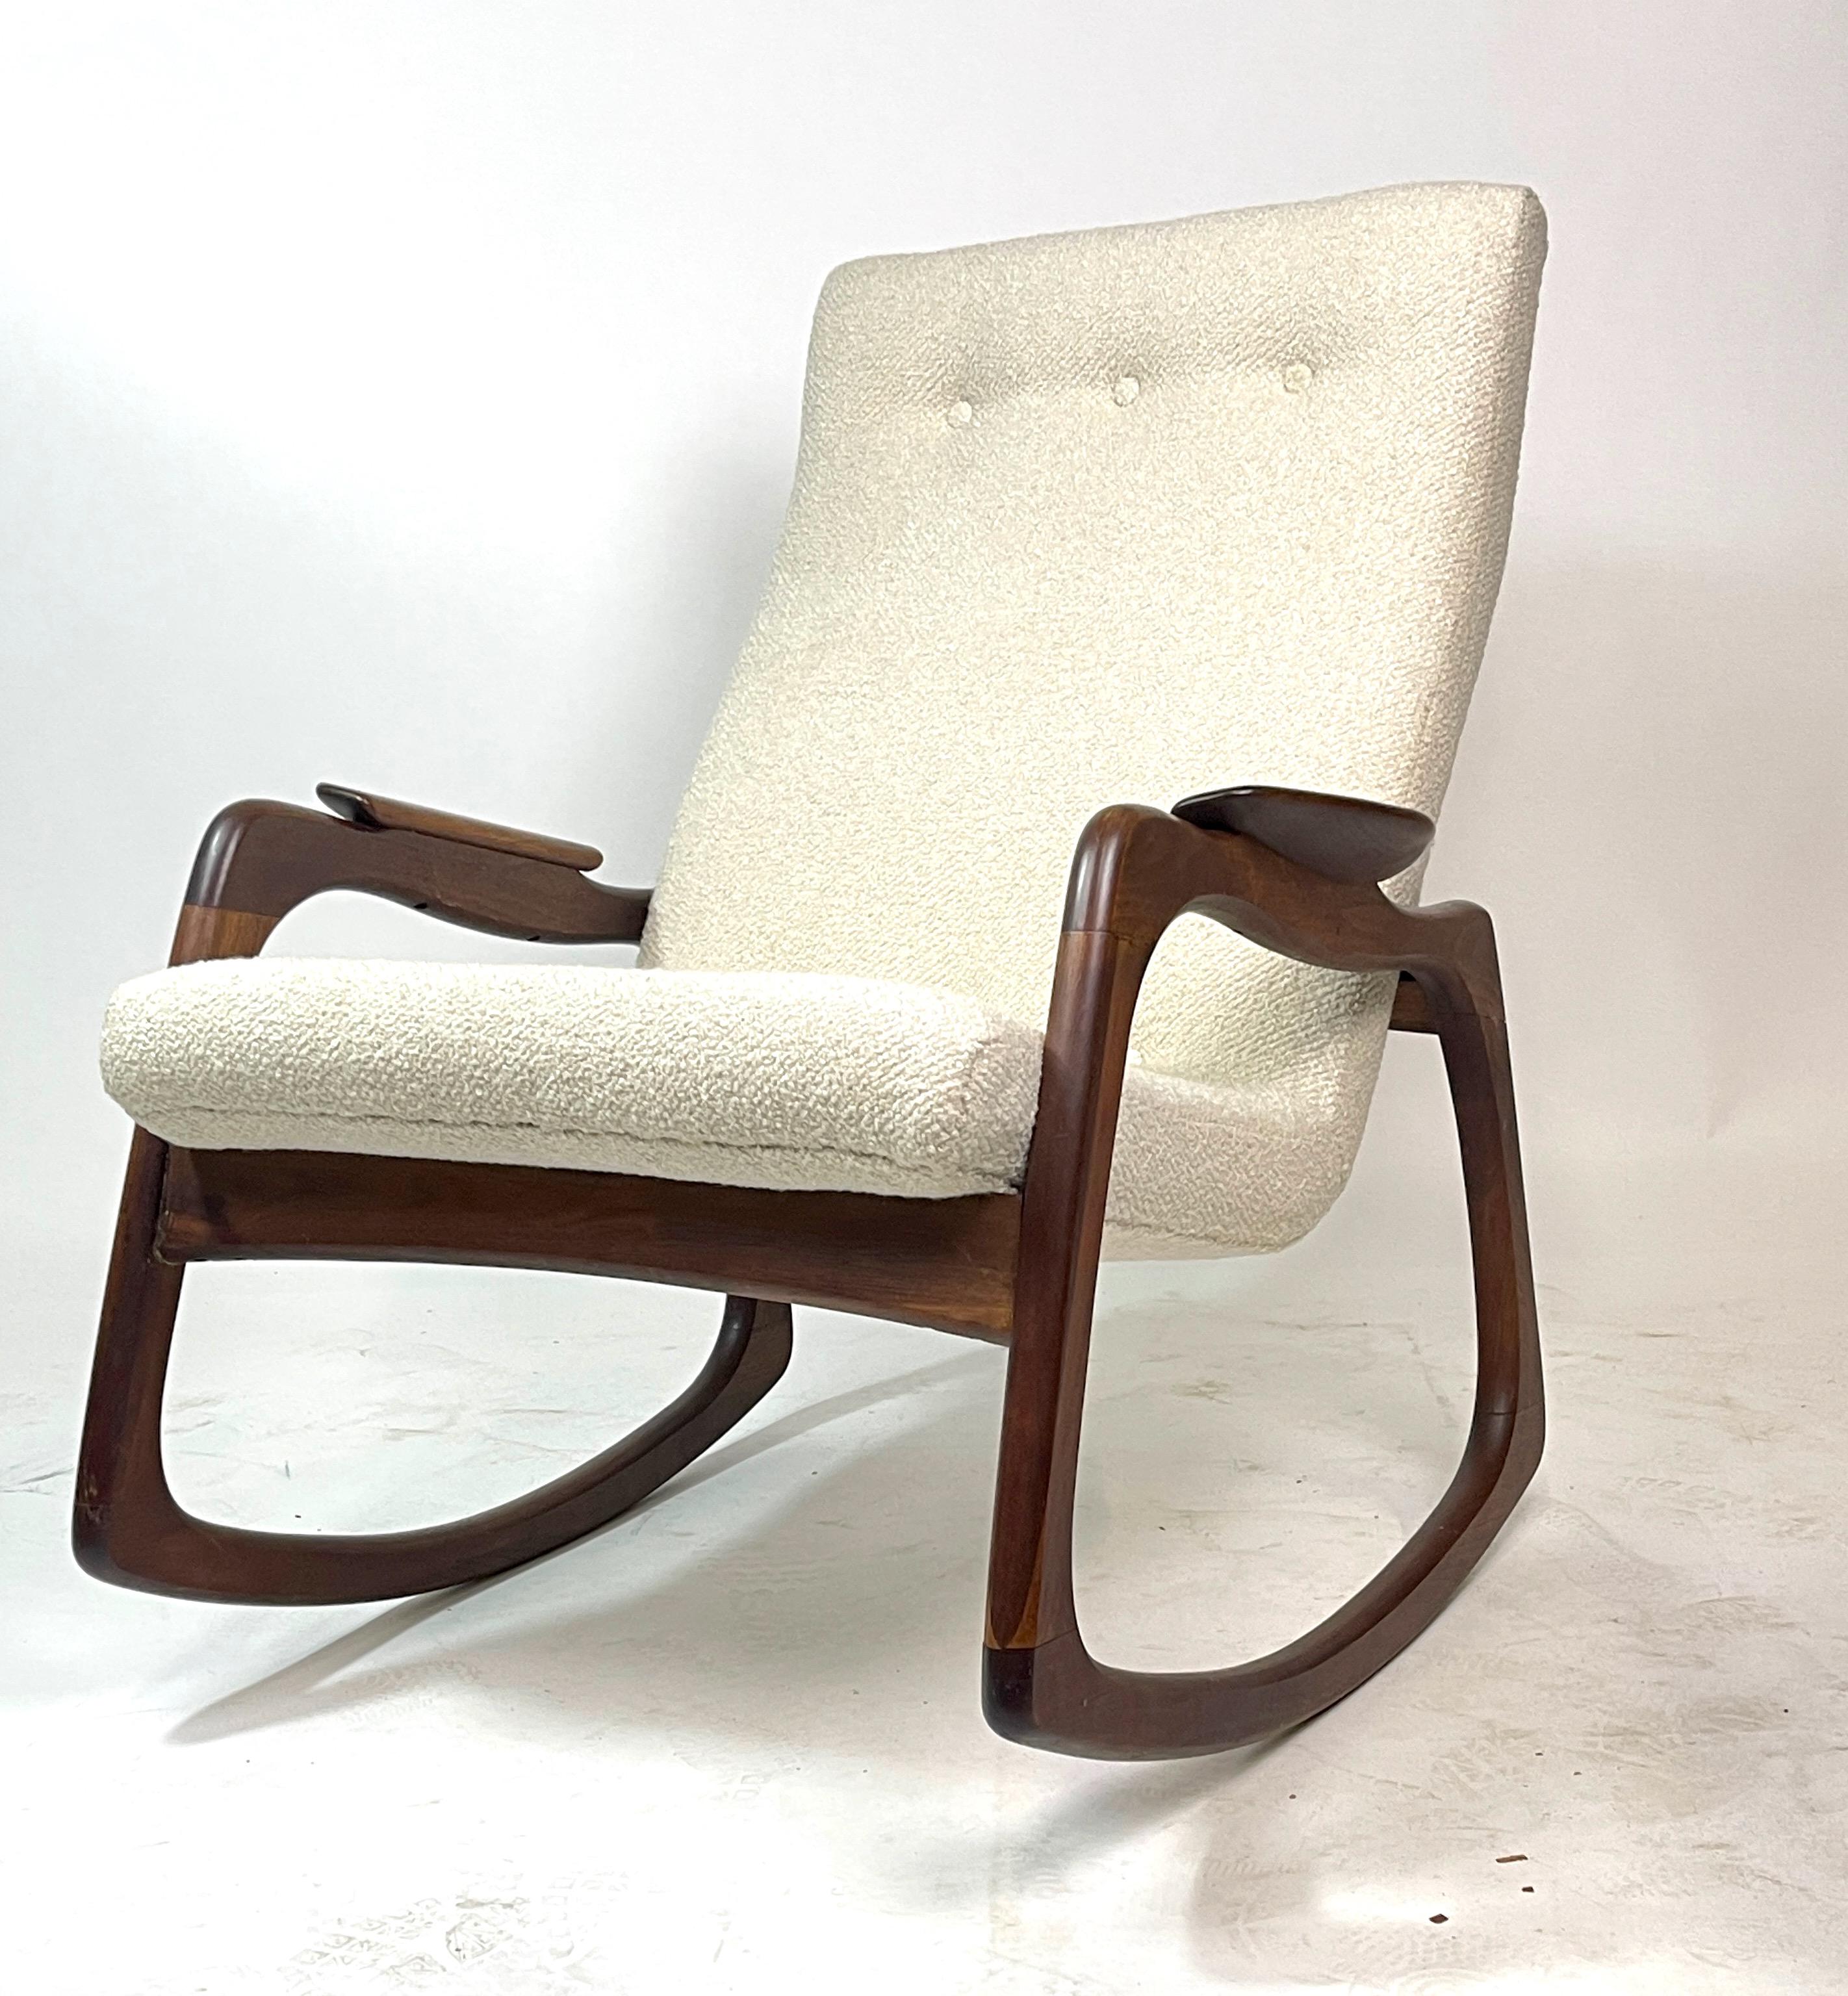 American Adrian Pearsall Craft Associates Sculptural Rocking Chair Rocker New Upholstery